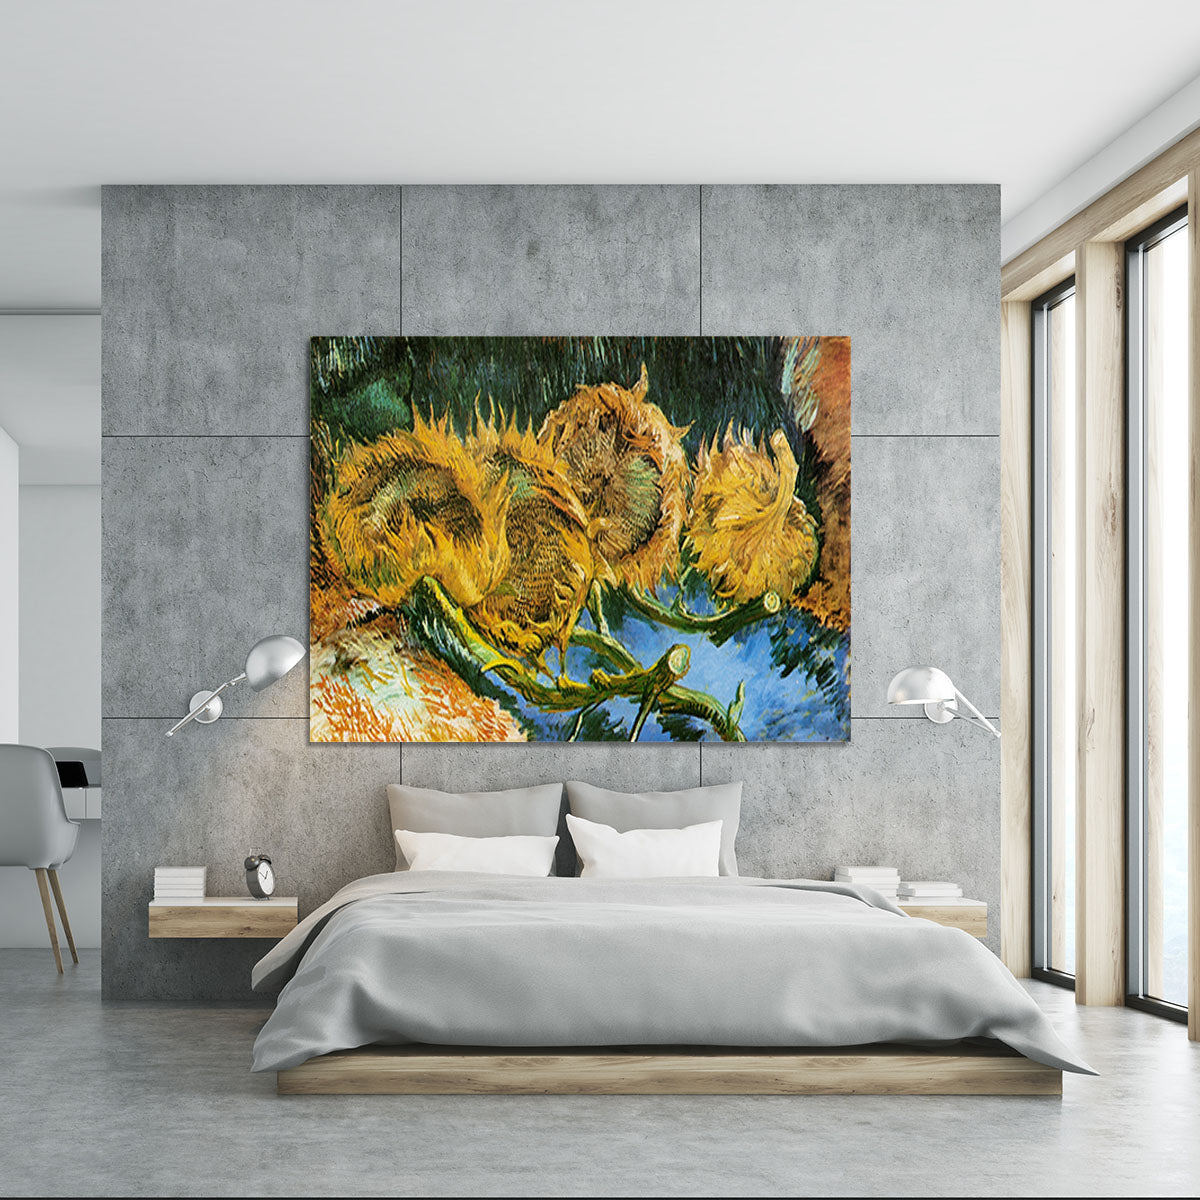 Four Cut Sunflowers by Van Gogh Canvas Print or Poster - Canvas Art Rocks - 5